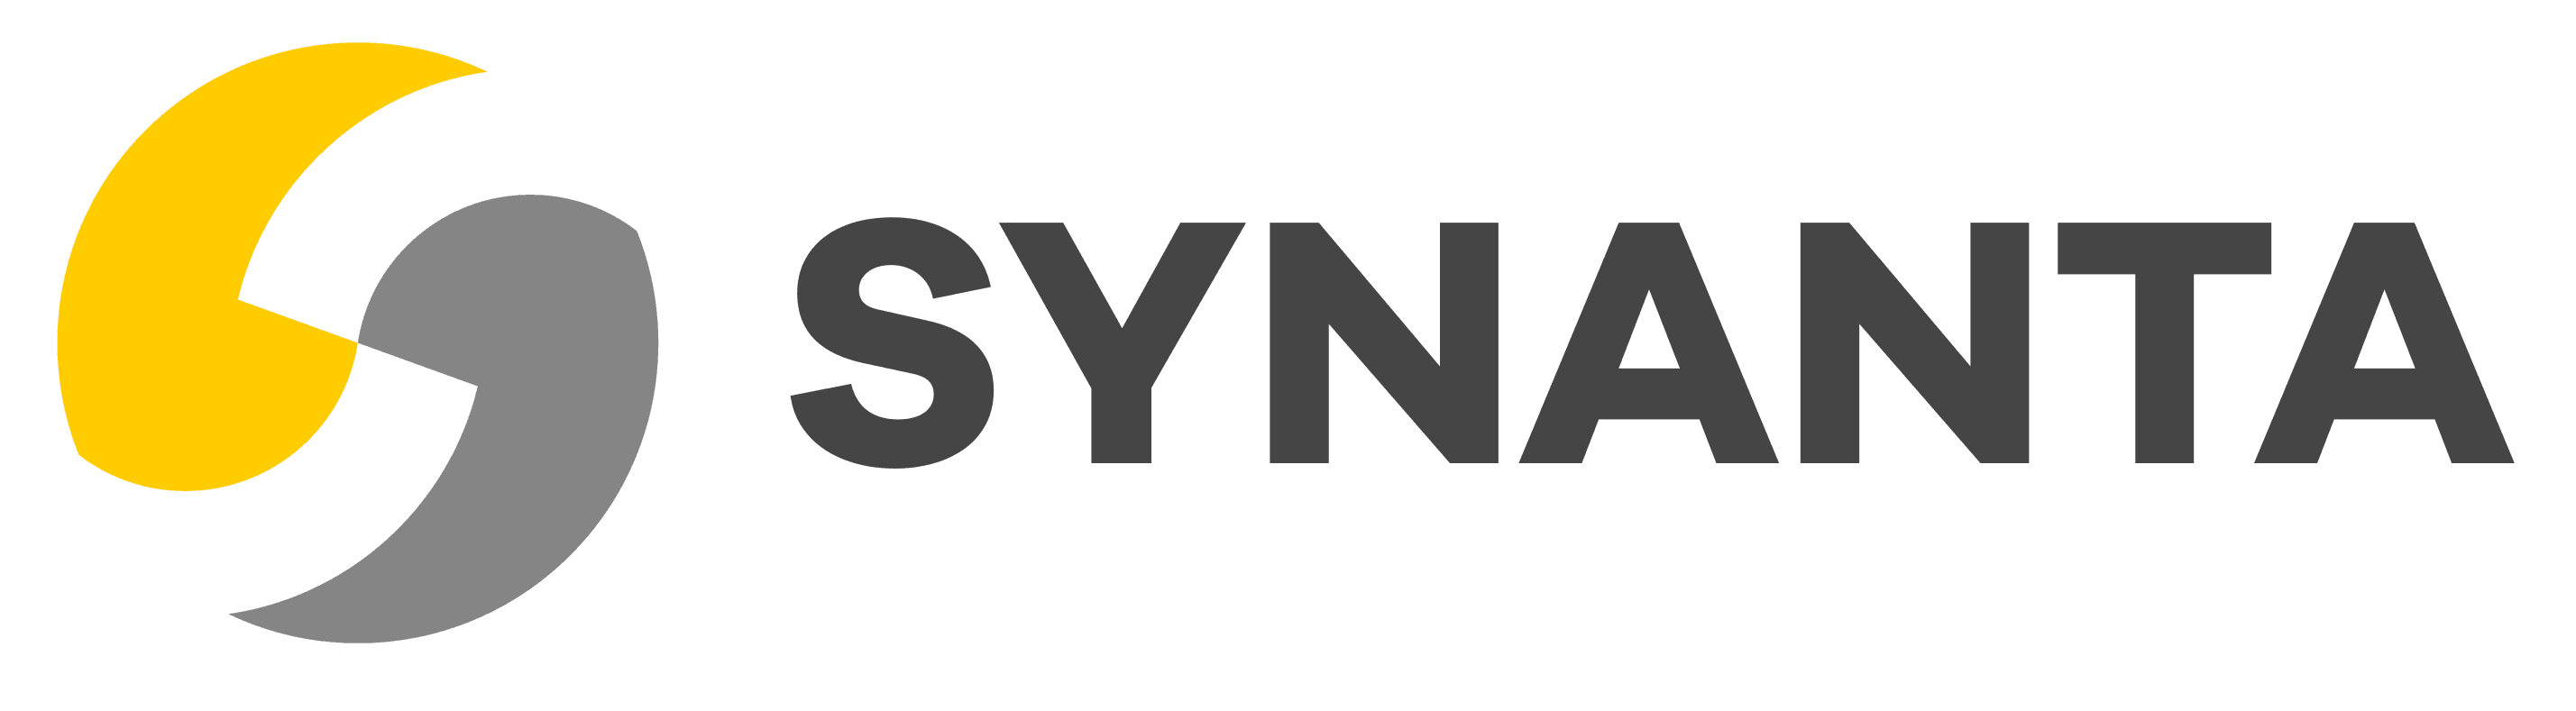 Synanta transparency1 cropped